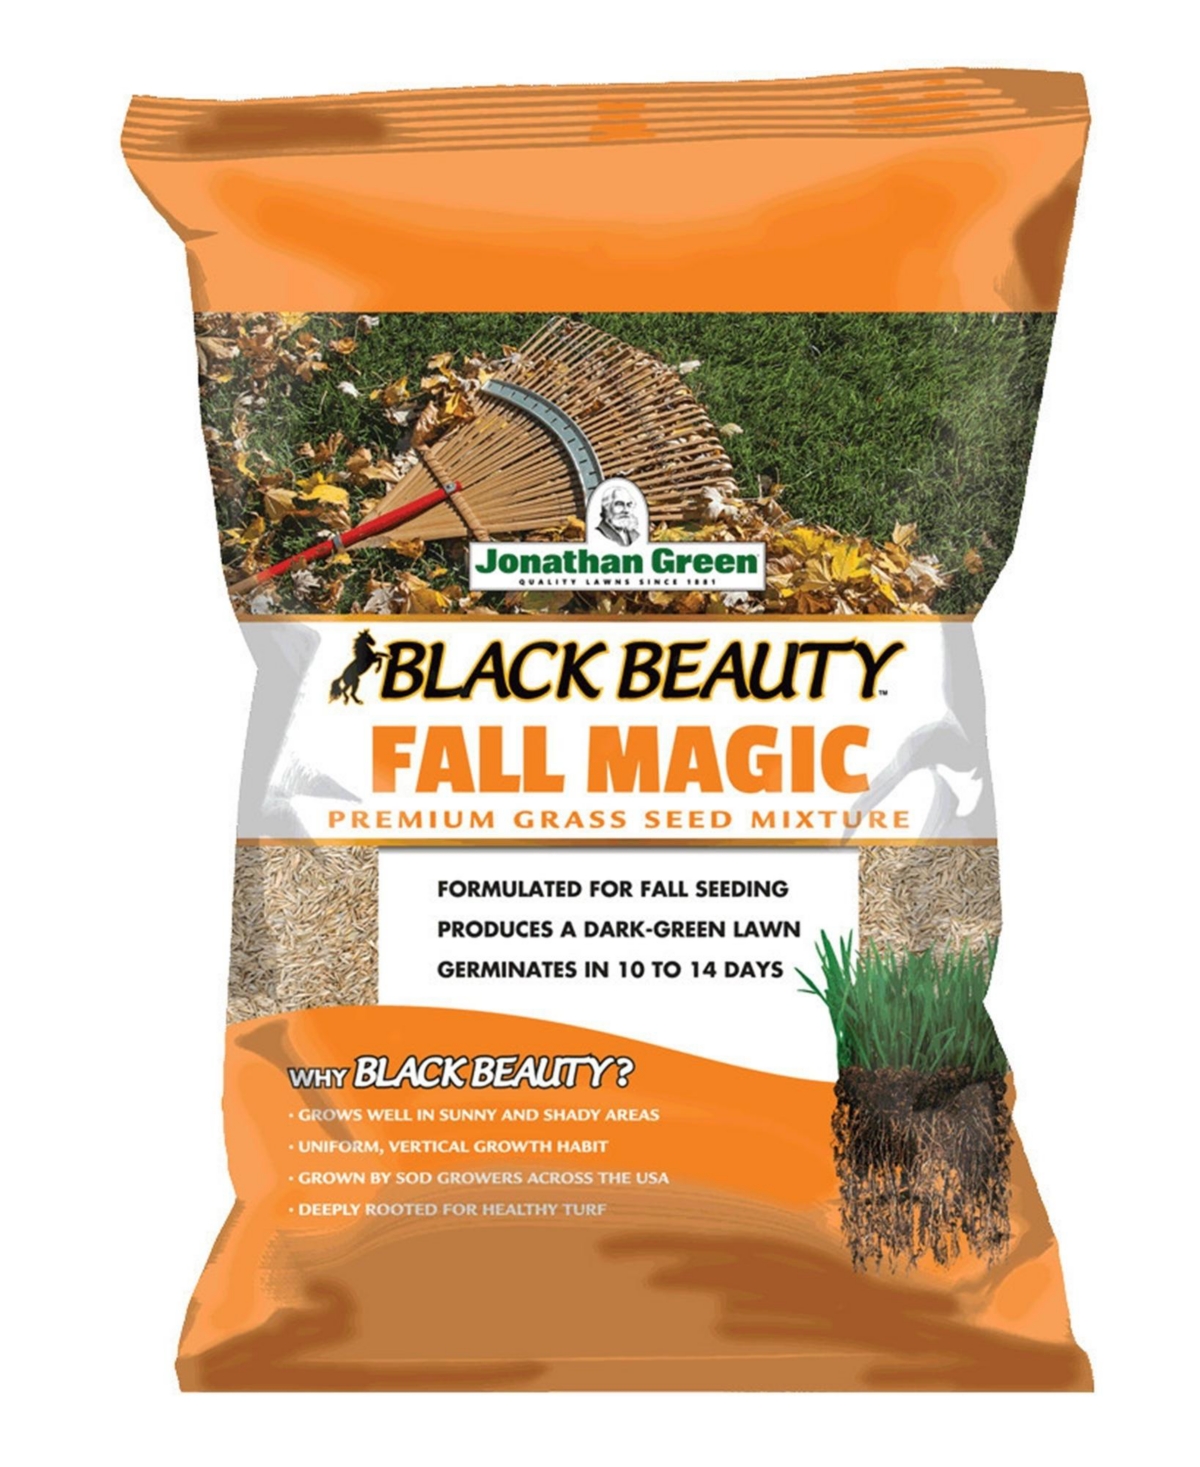 (#10768) Black Beauty Fall Magic Grass Seed, 7lb bag - Brown